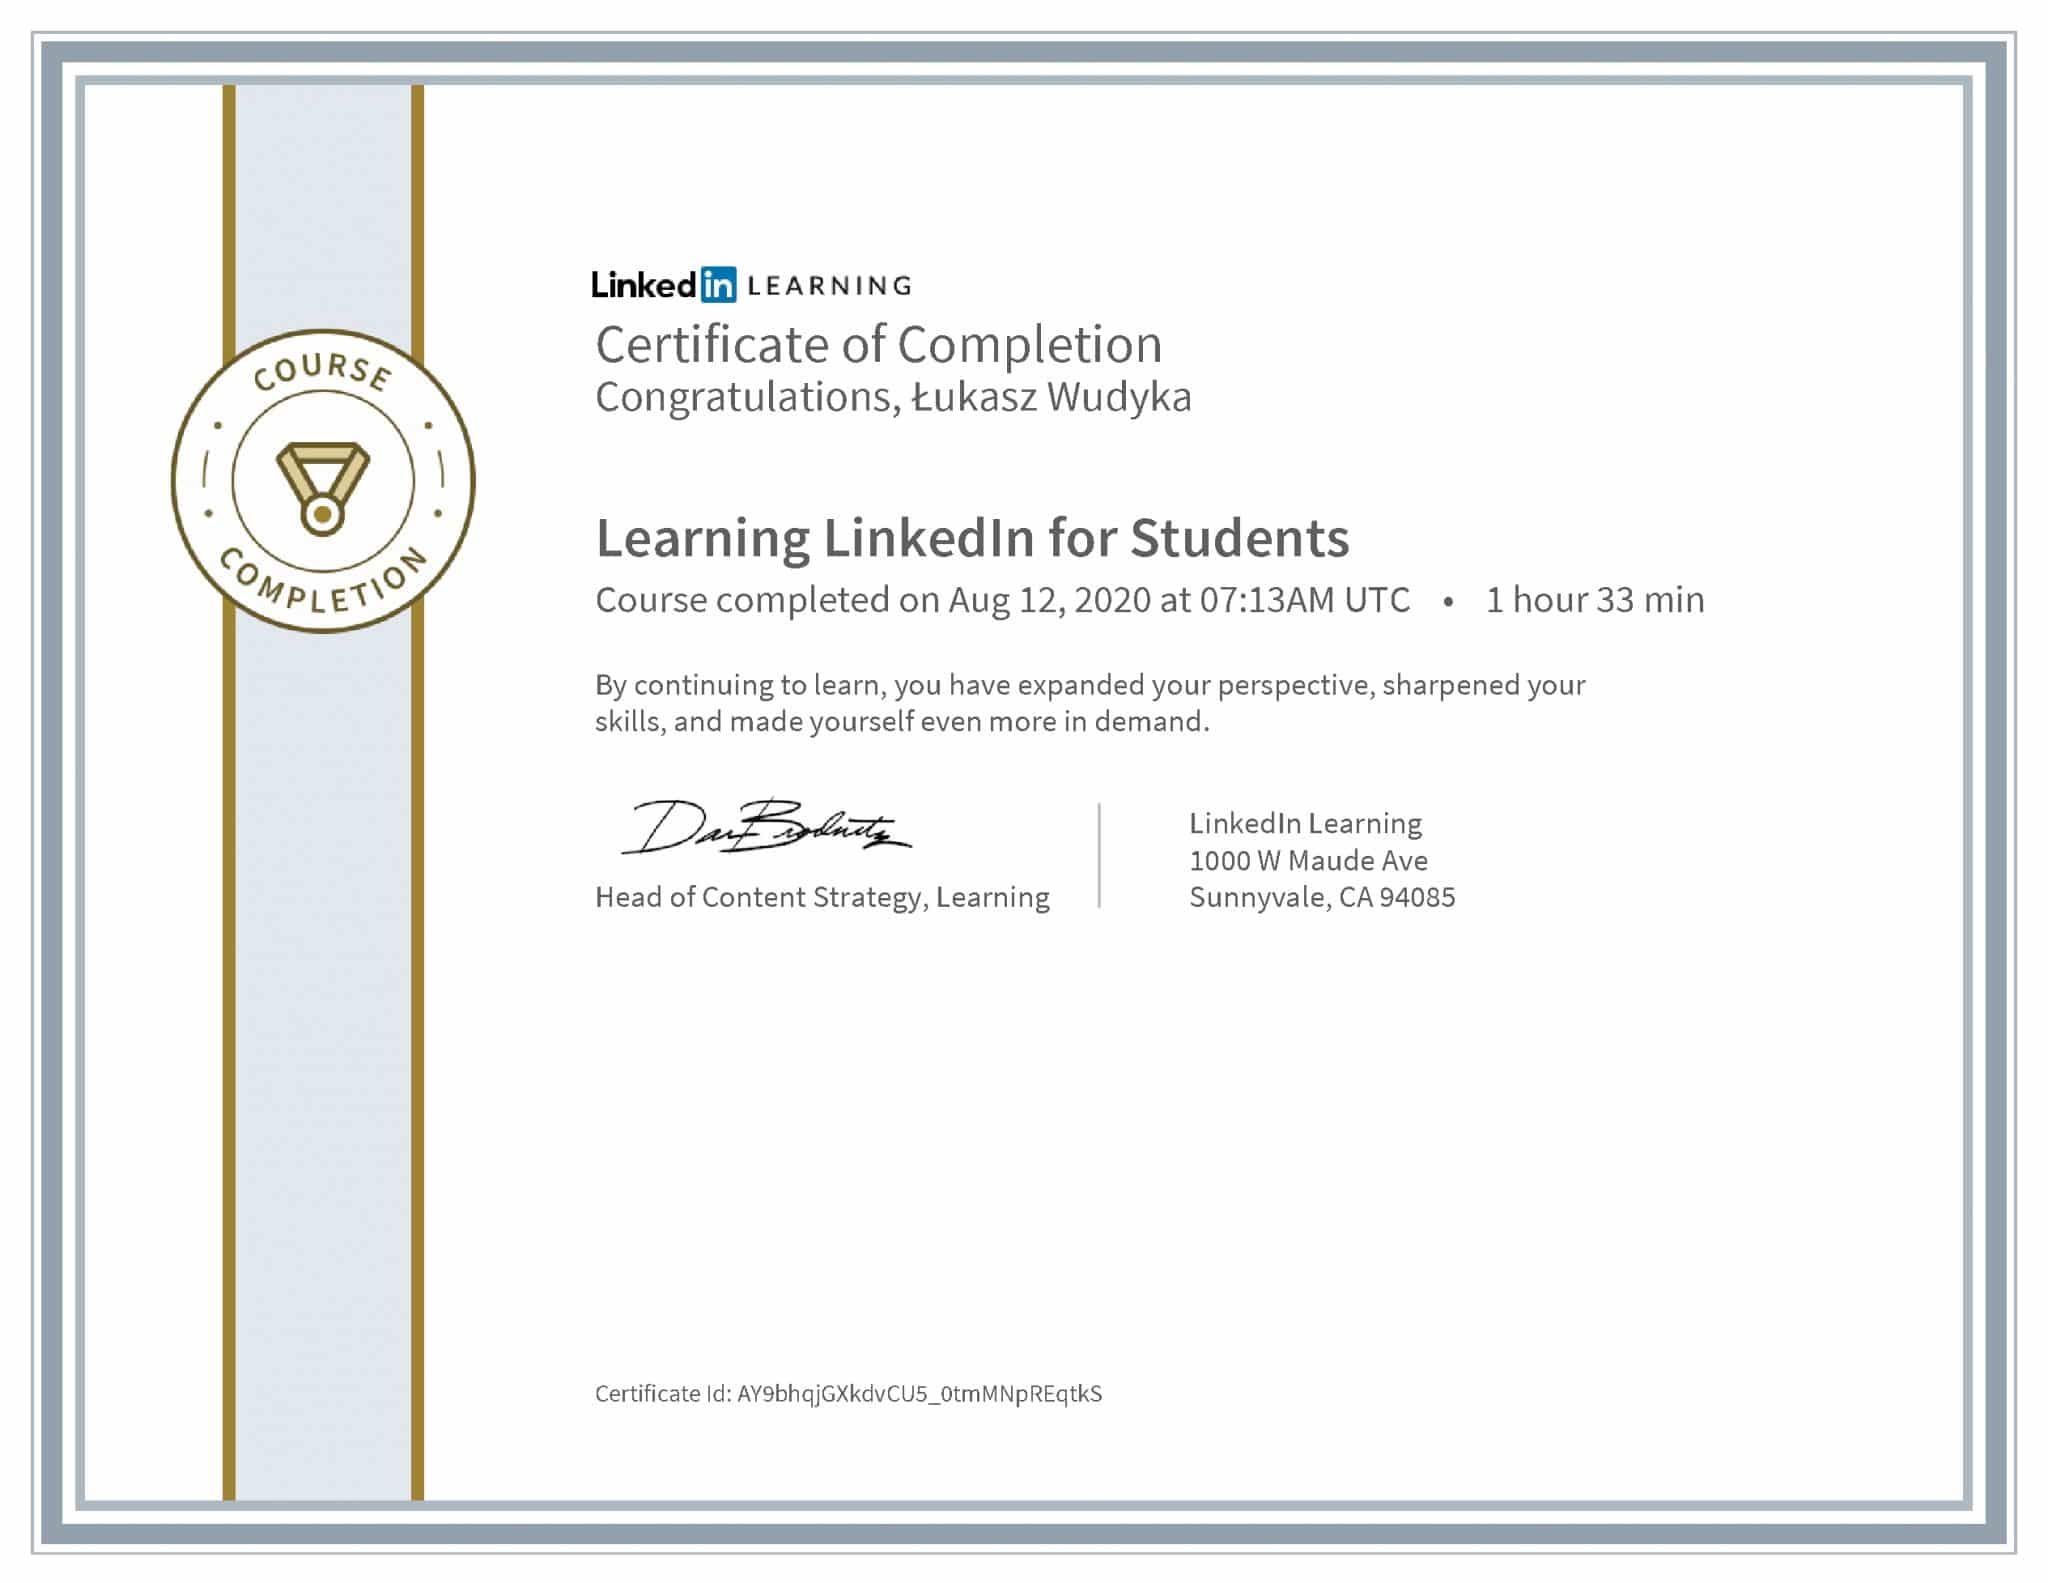 Łukasz Wudyka certyfikat LinkedIn Learning LinkedIn for Students